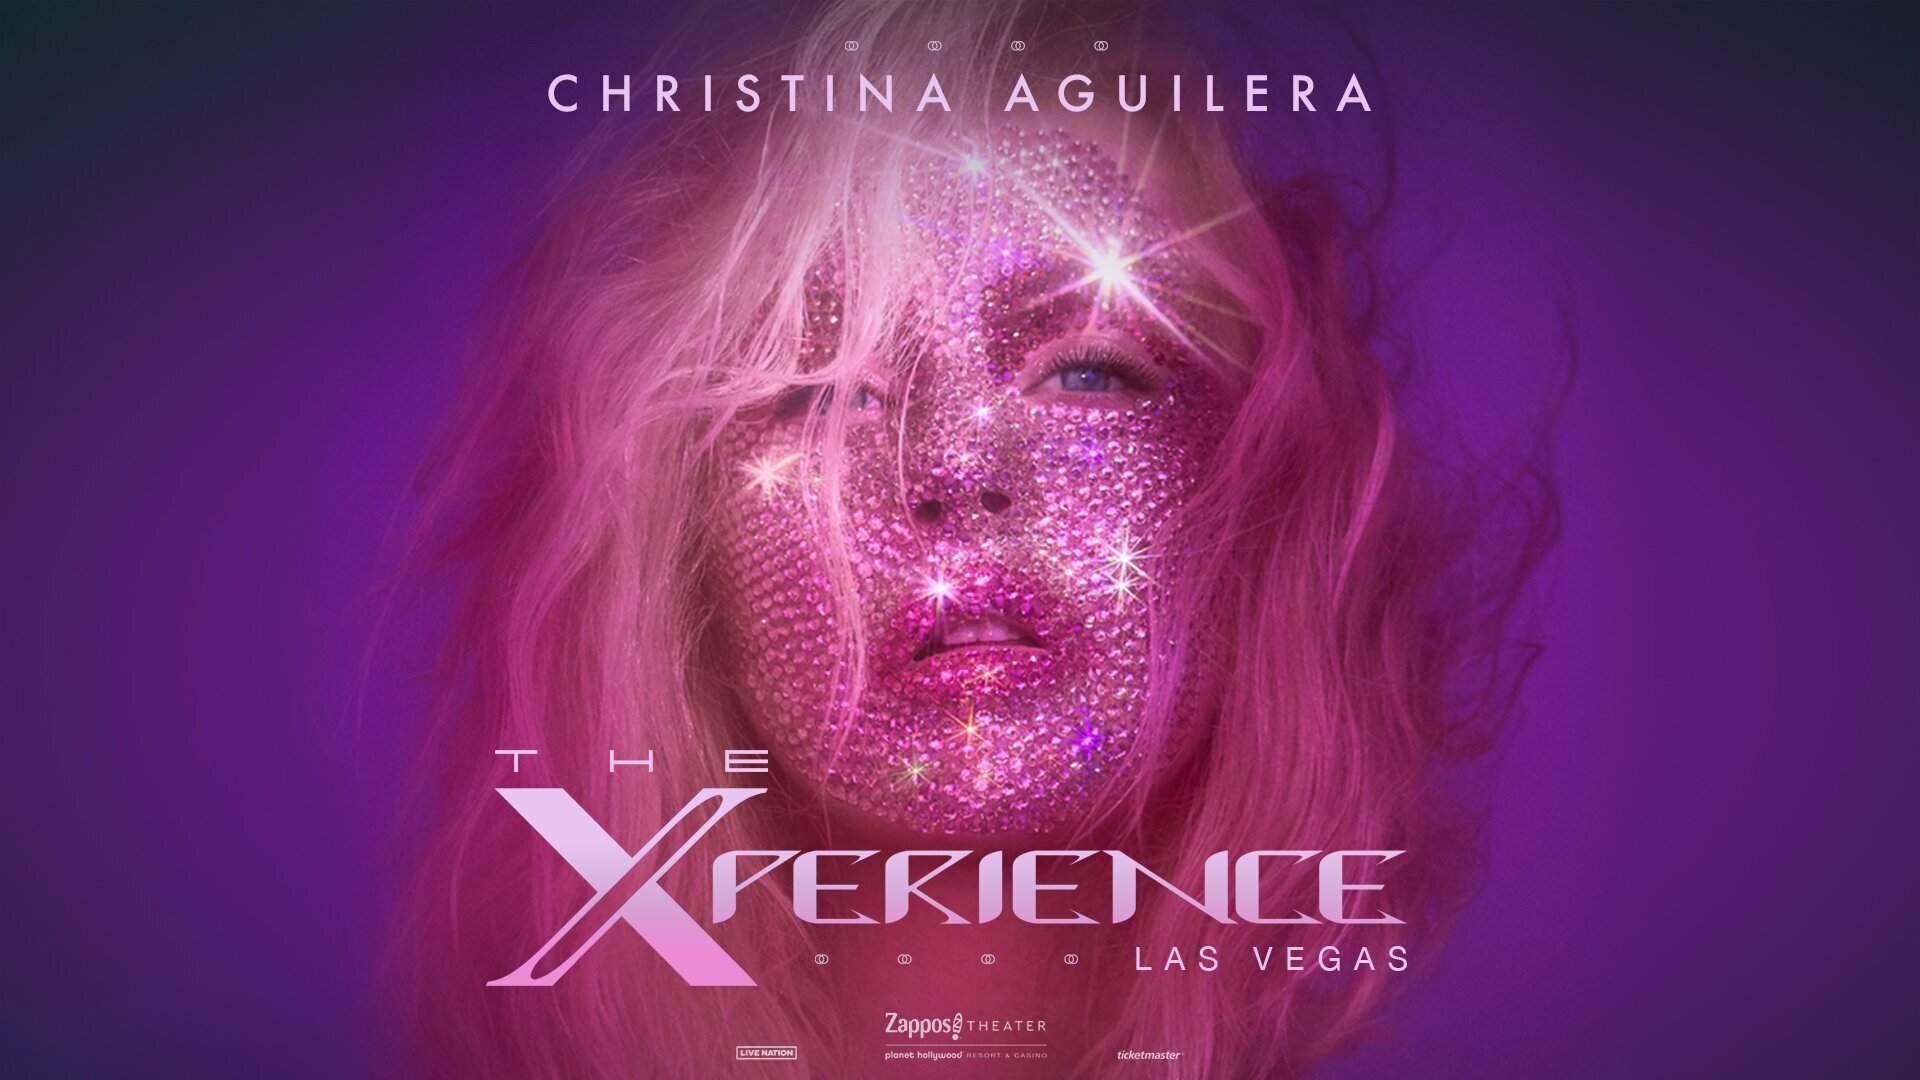 "The Xperience" Las Vegas Residency